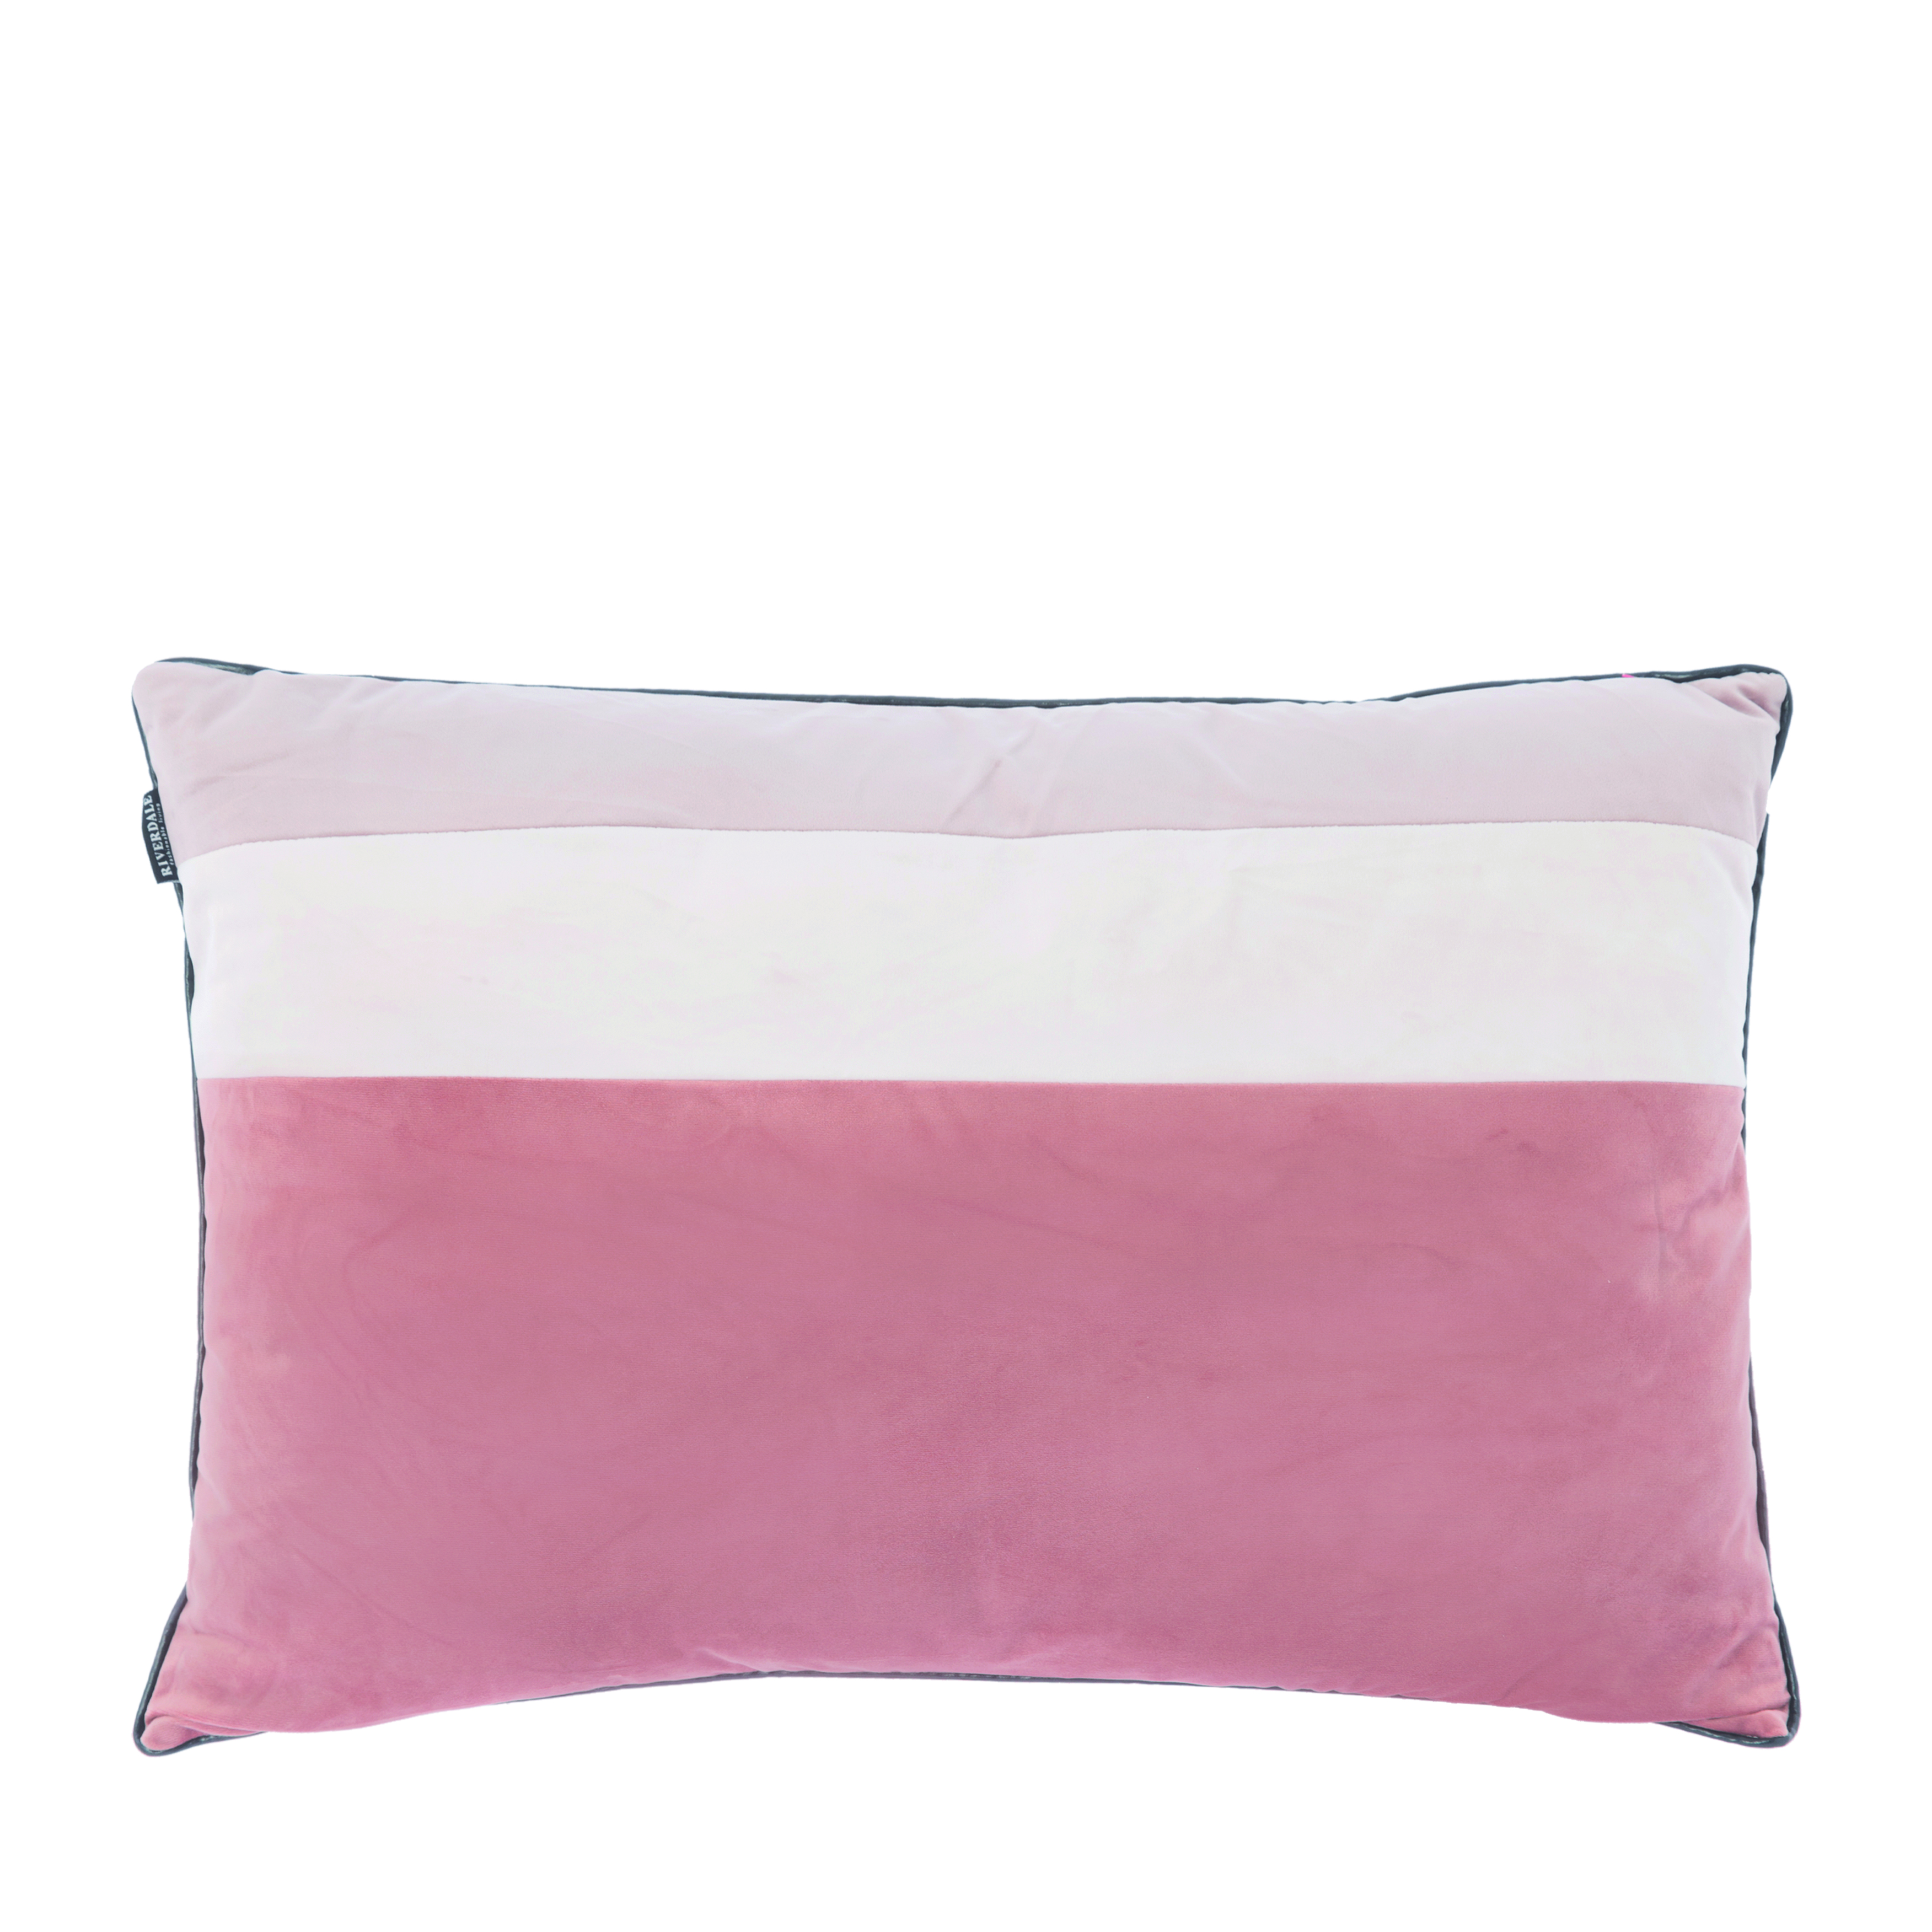 Cushion Hope Pink 50x70